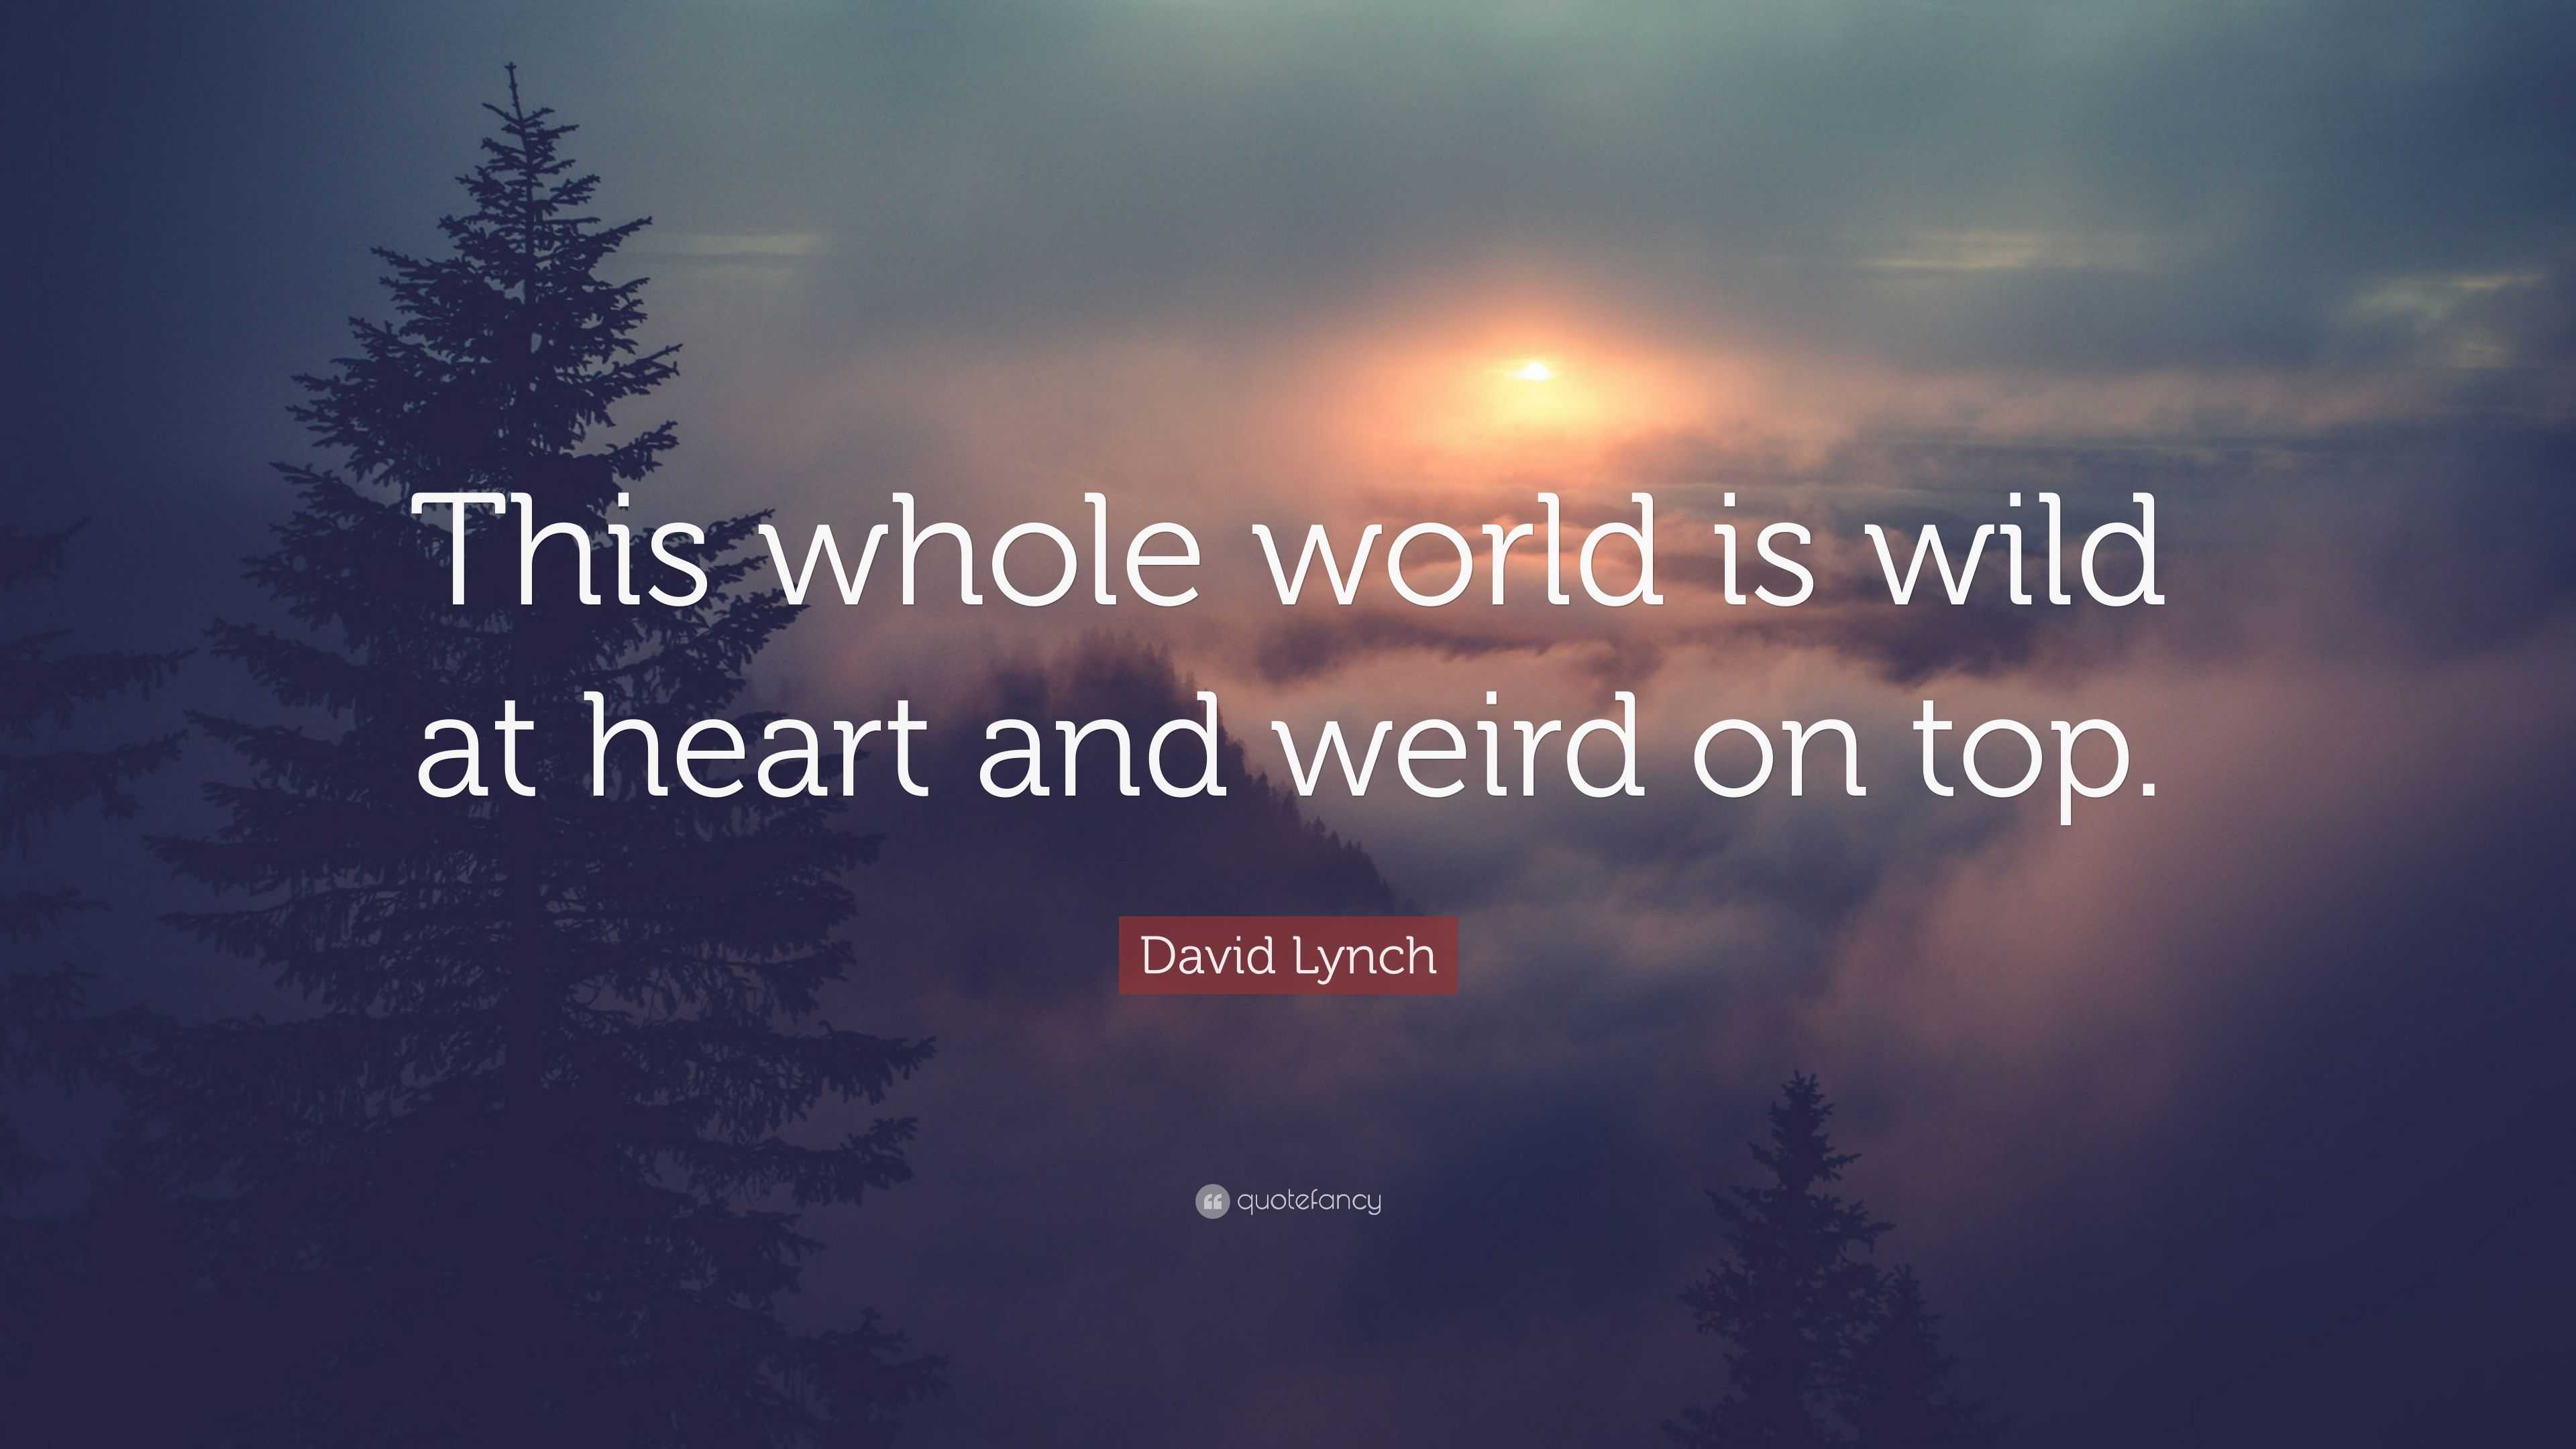 david lynch font wild at heart